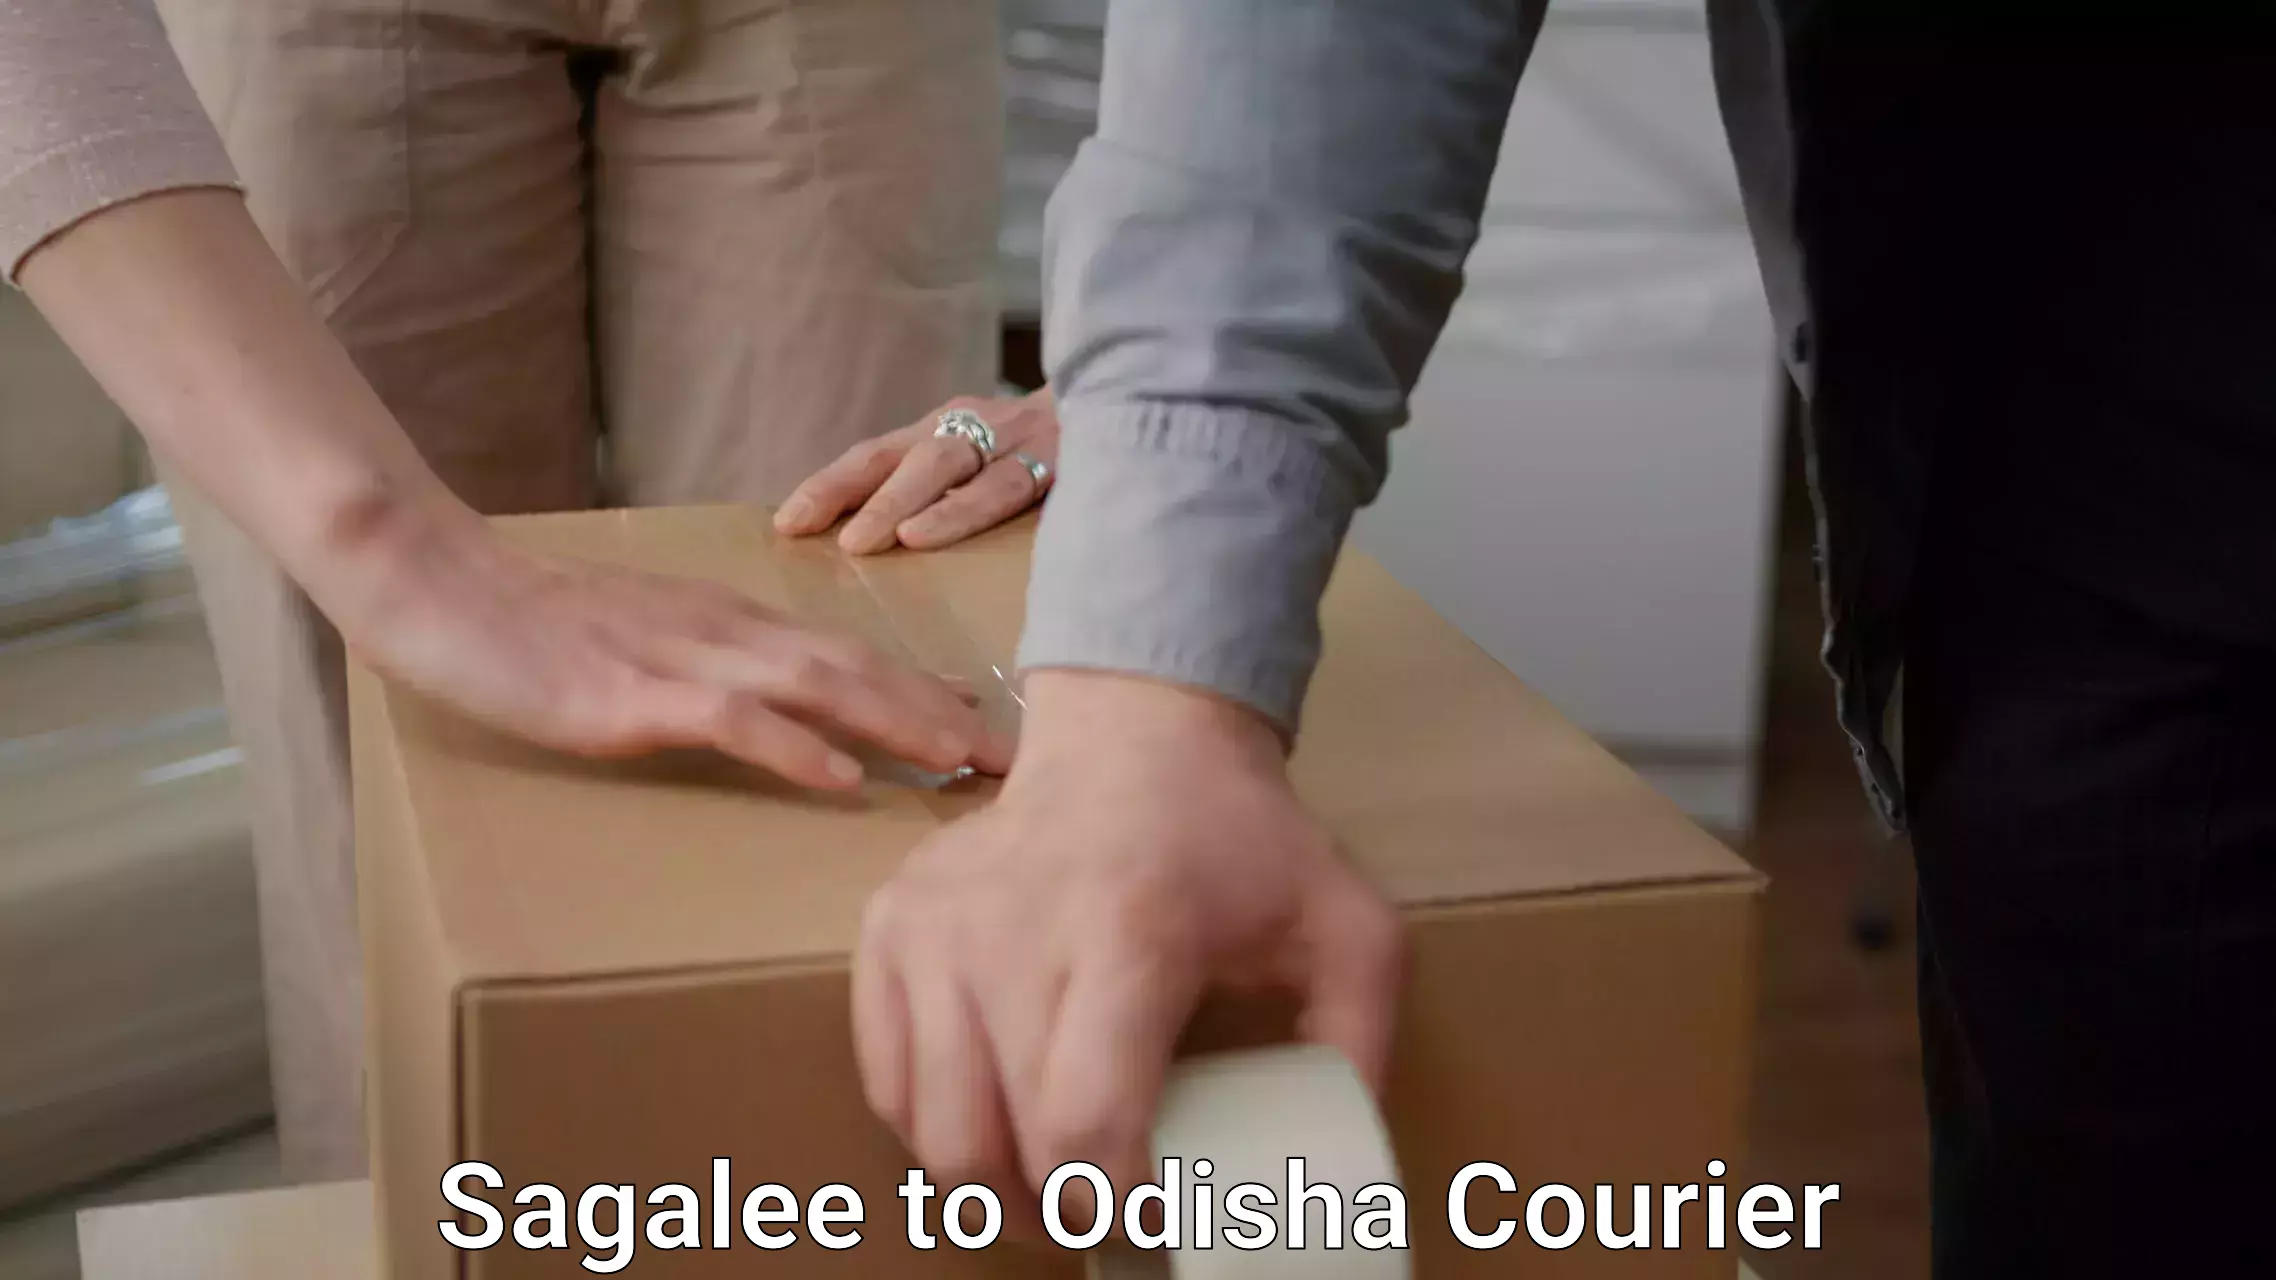 Quality moving company Sagalee to Odisha